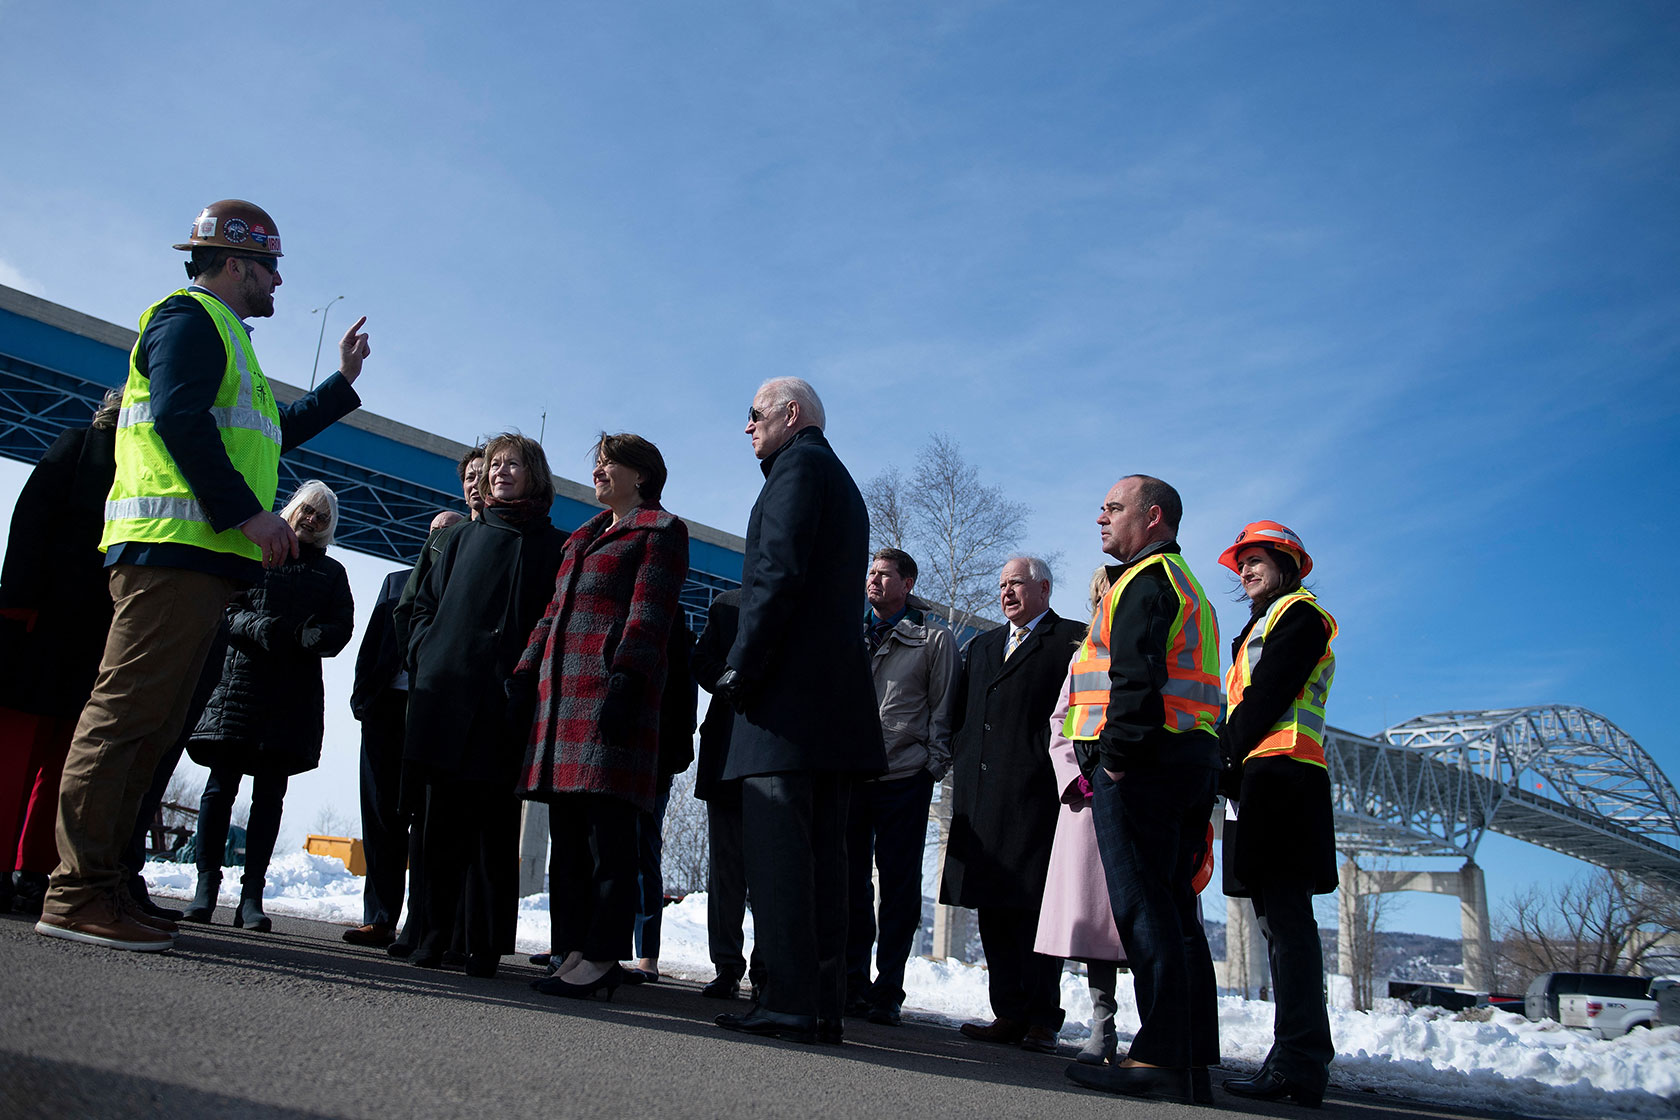 President Joe Biden in group in front of bridge